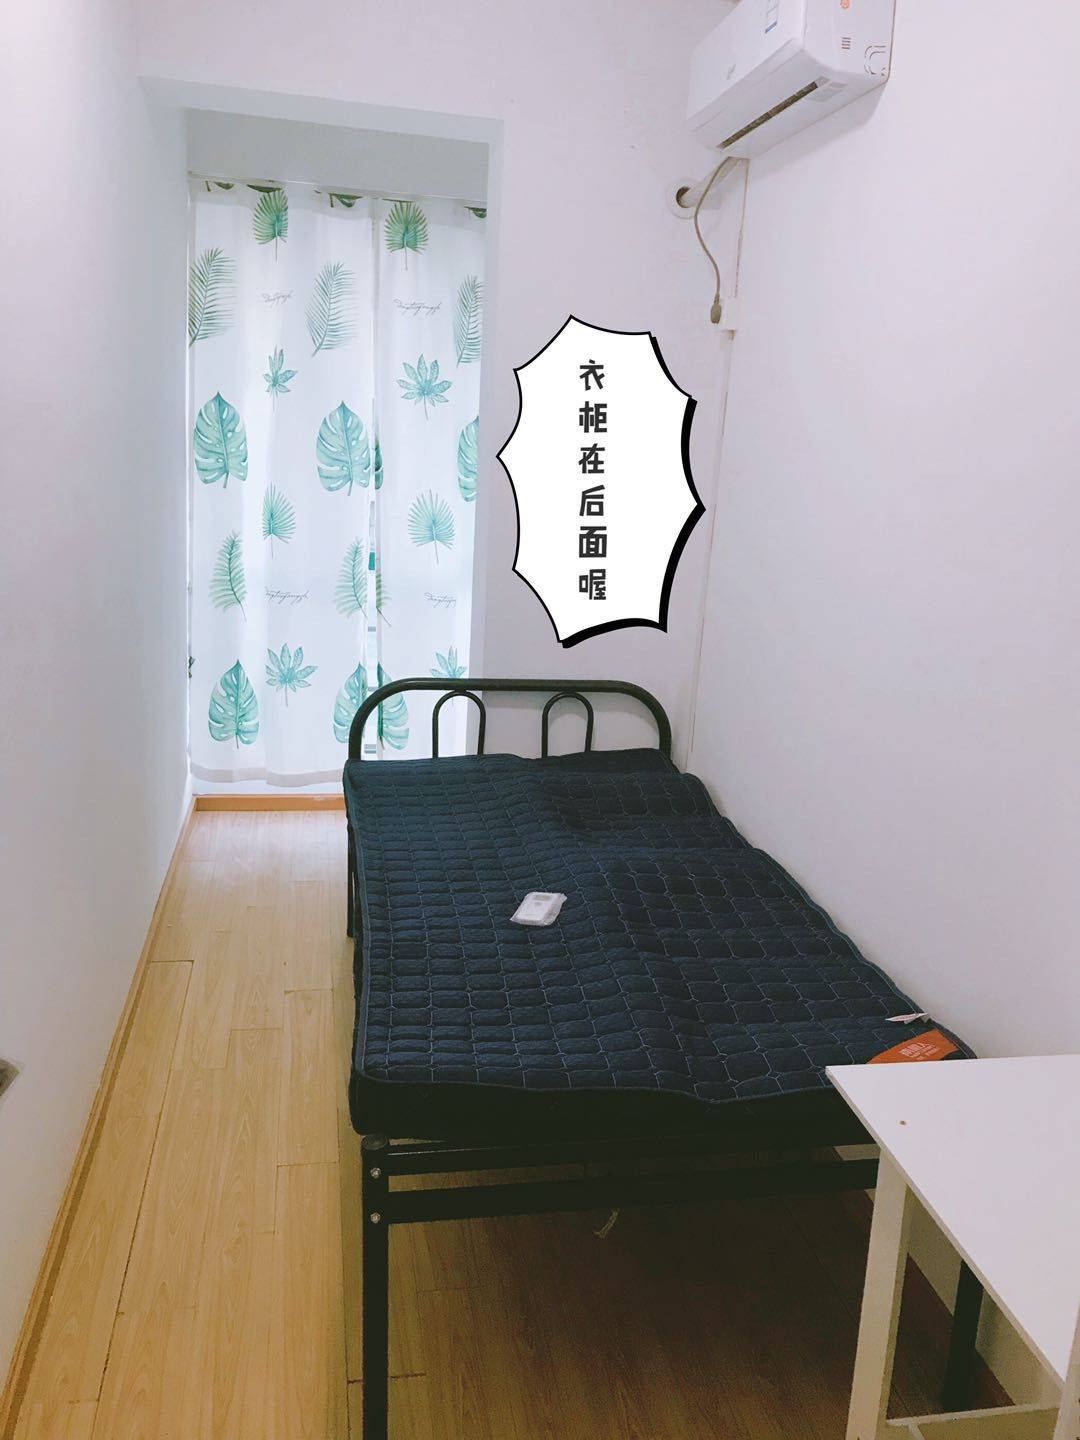 Hangzhou-Shangcheng-Cozy Home,Clean&Comfy,No Gender Limit,Hustle & Bustle,“Friends”,Chilled,LGBTQ Friendly